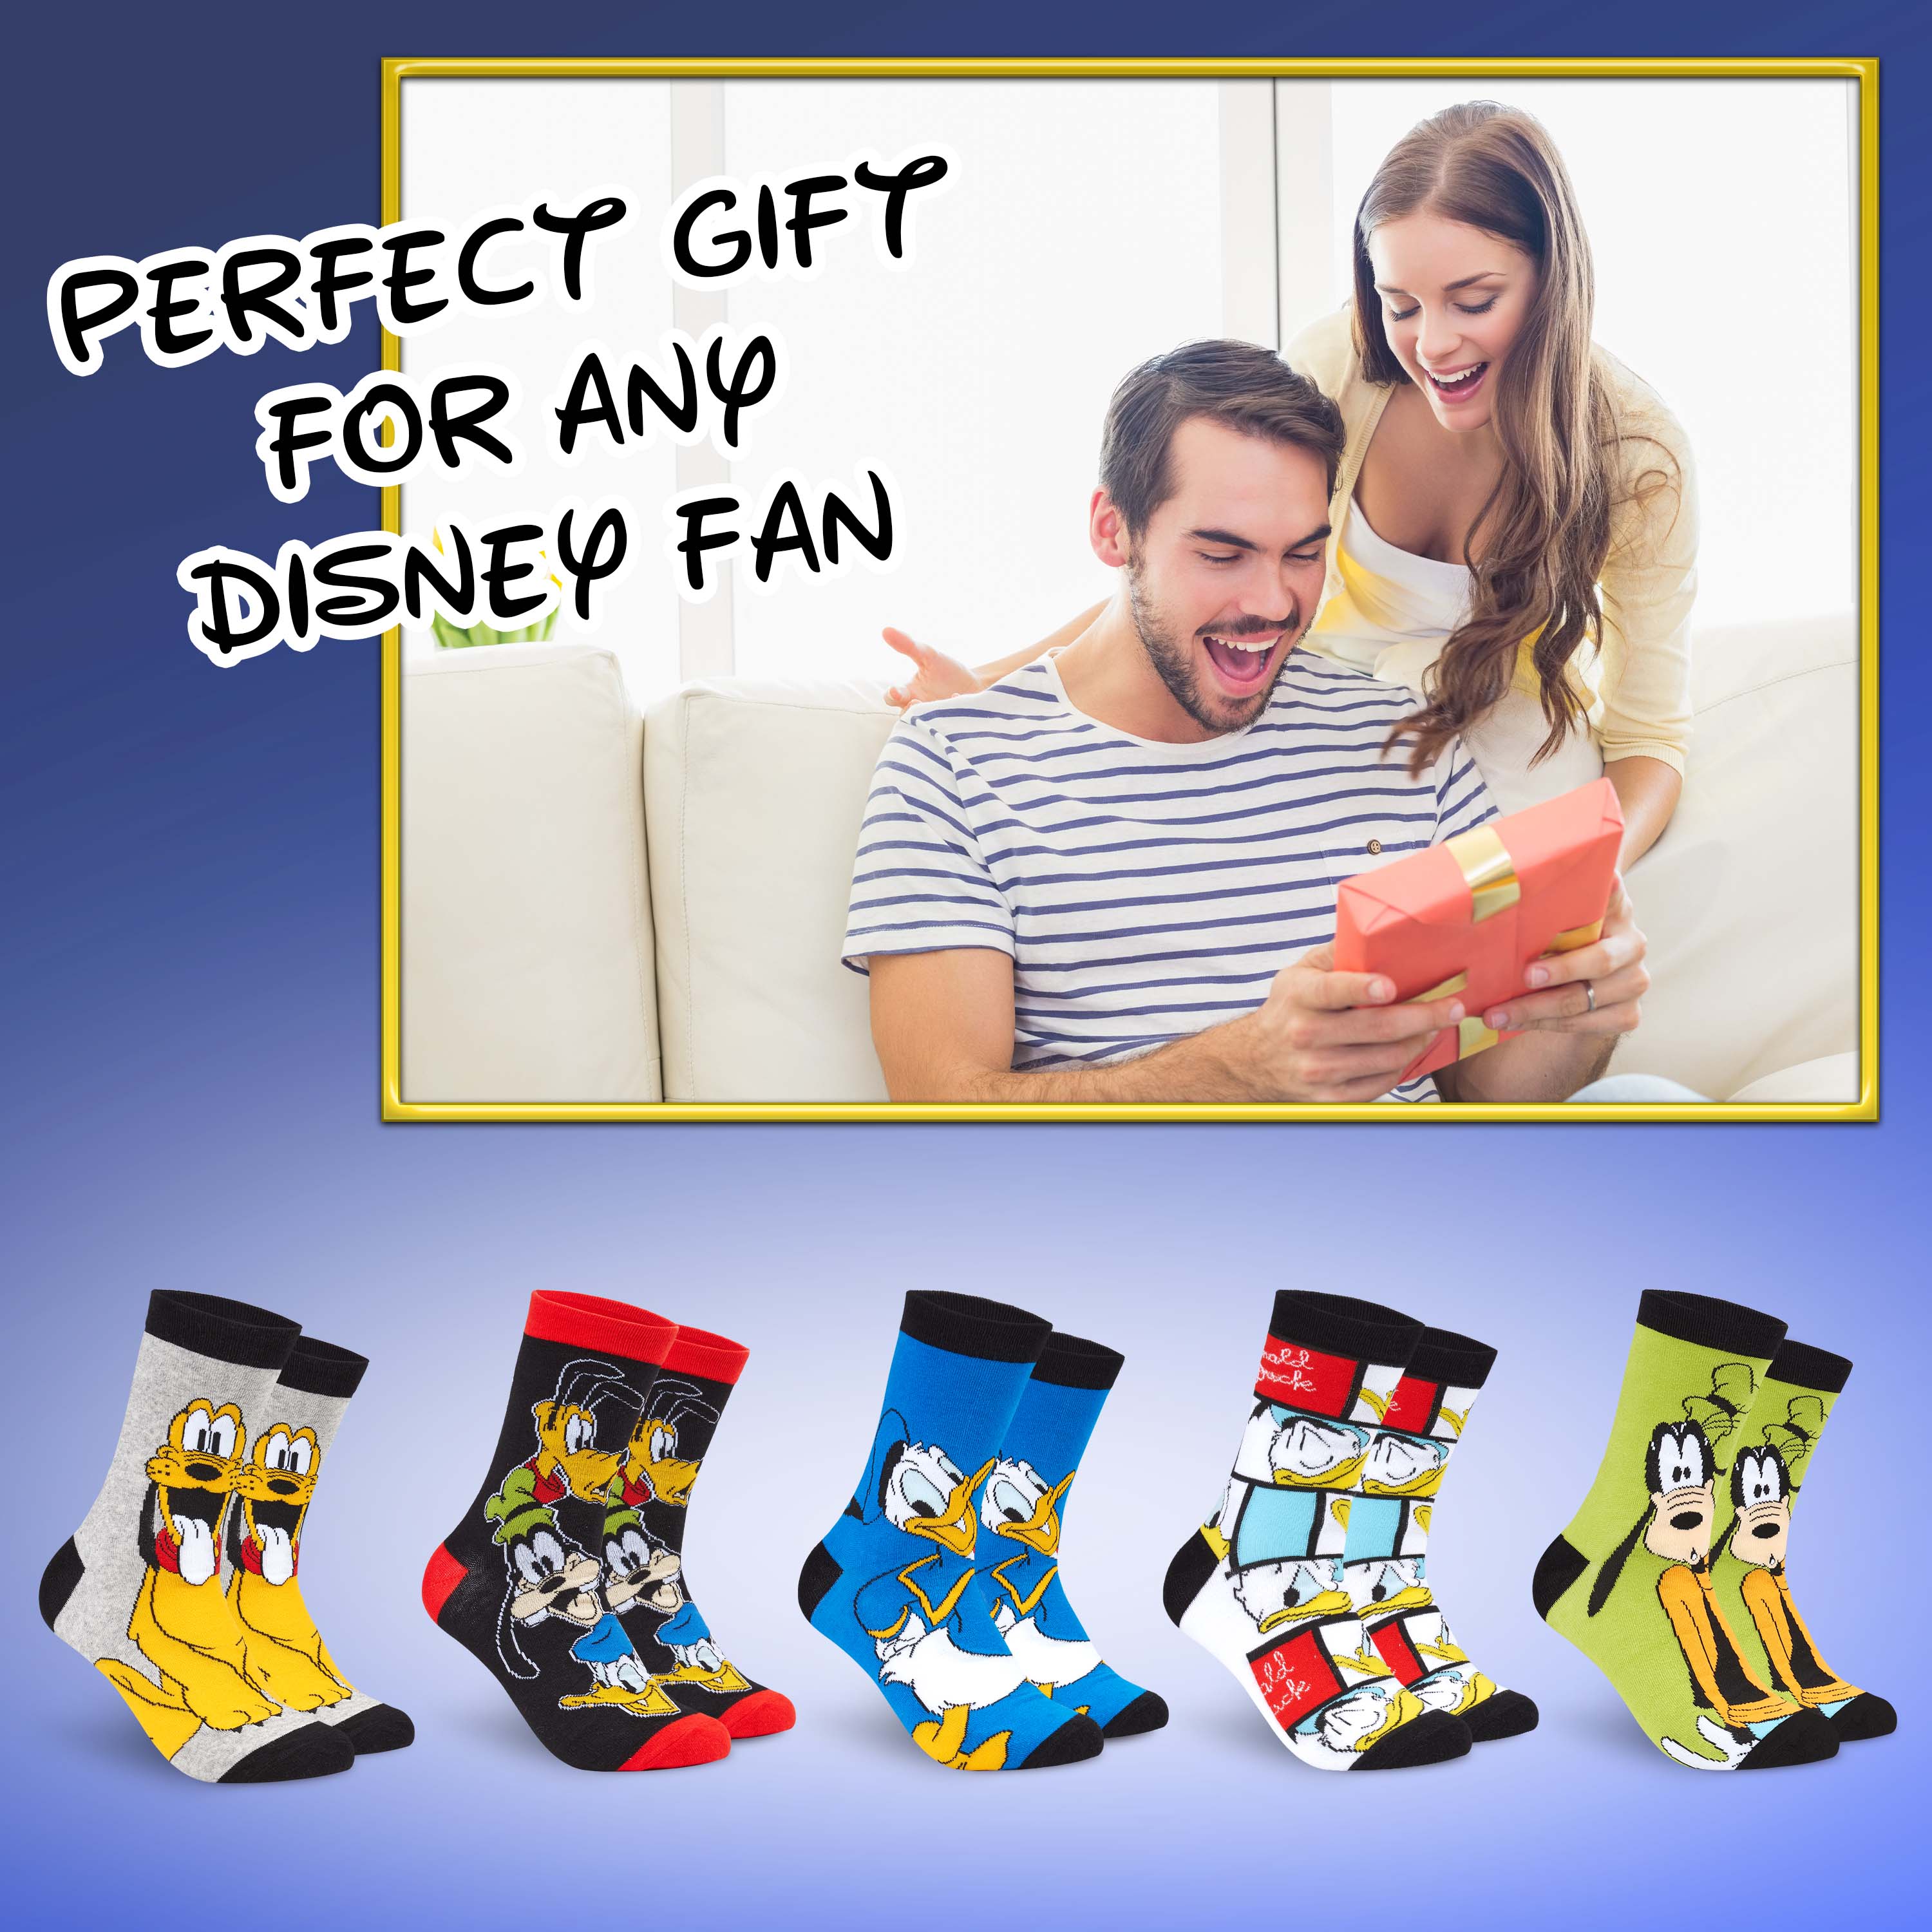 Disney Mens Socks, 5 Pack Novelty Socks, Pluto Donald Goofy Disney